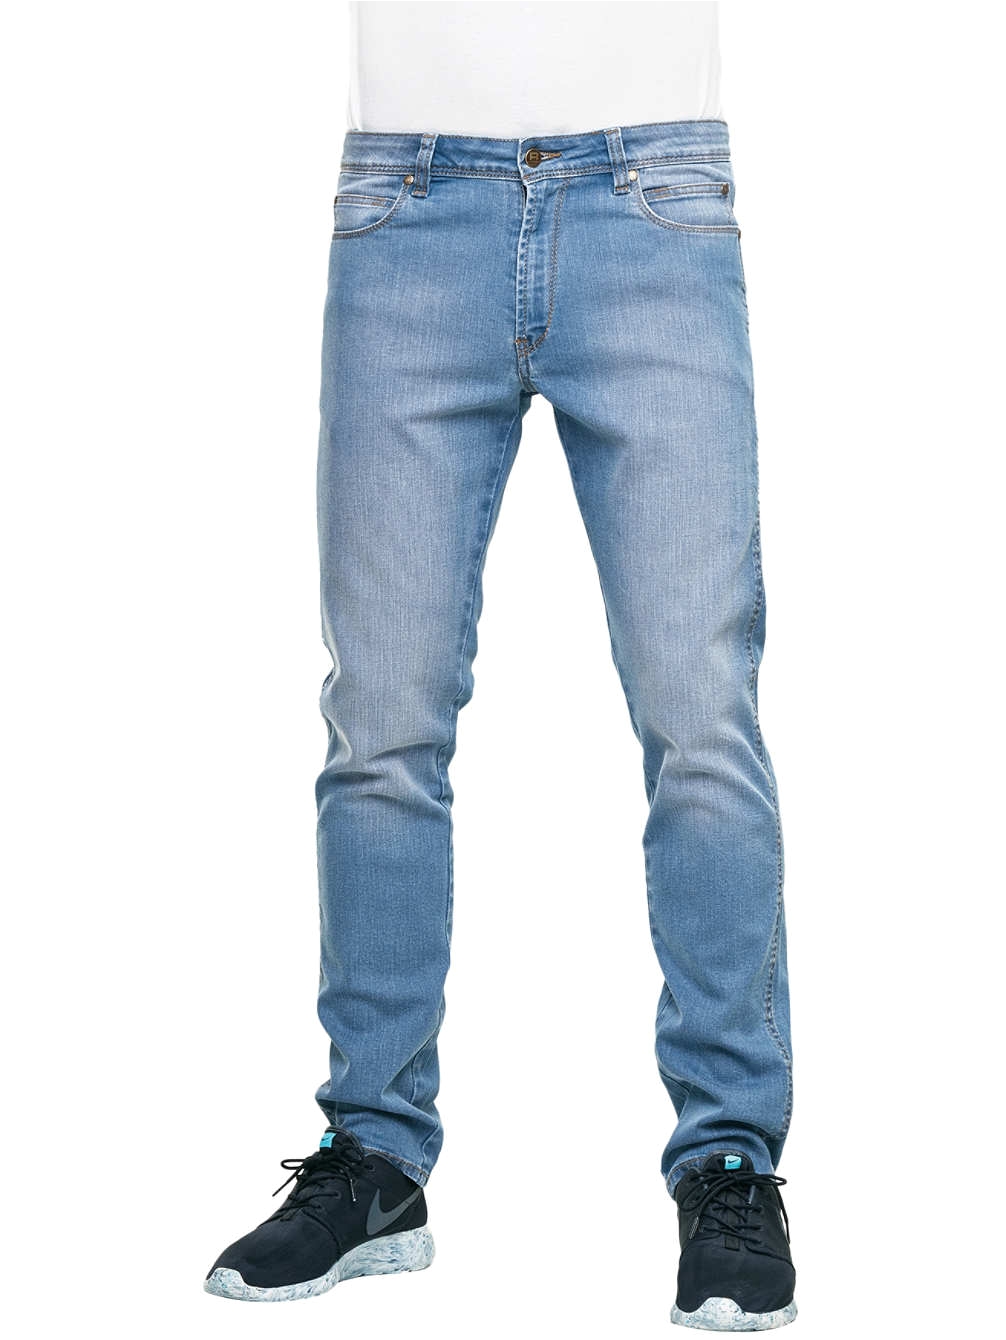 jeans for men article number 325902 reell nova 2 light blue maqlray100